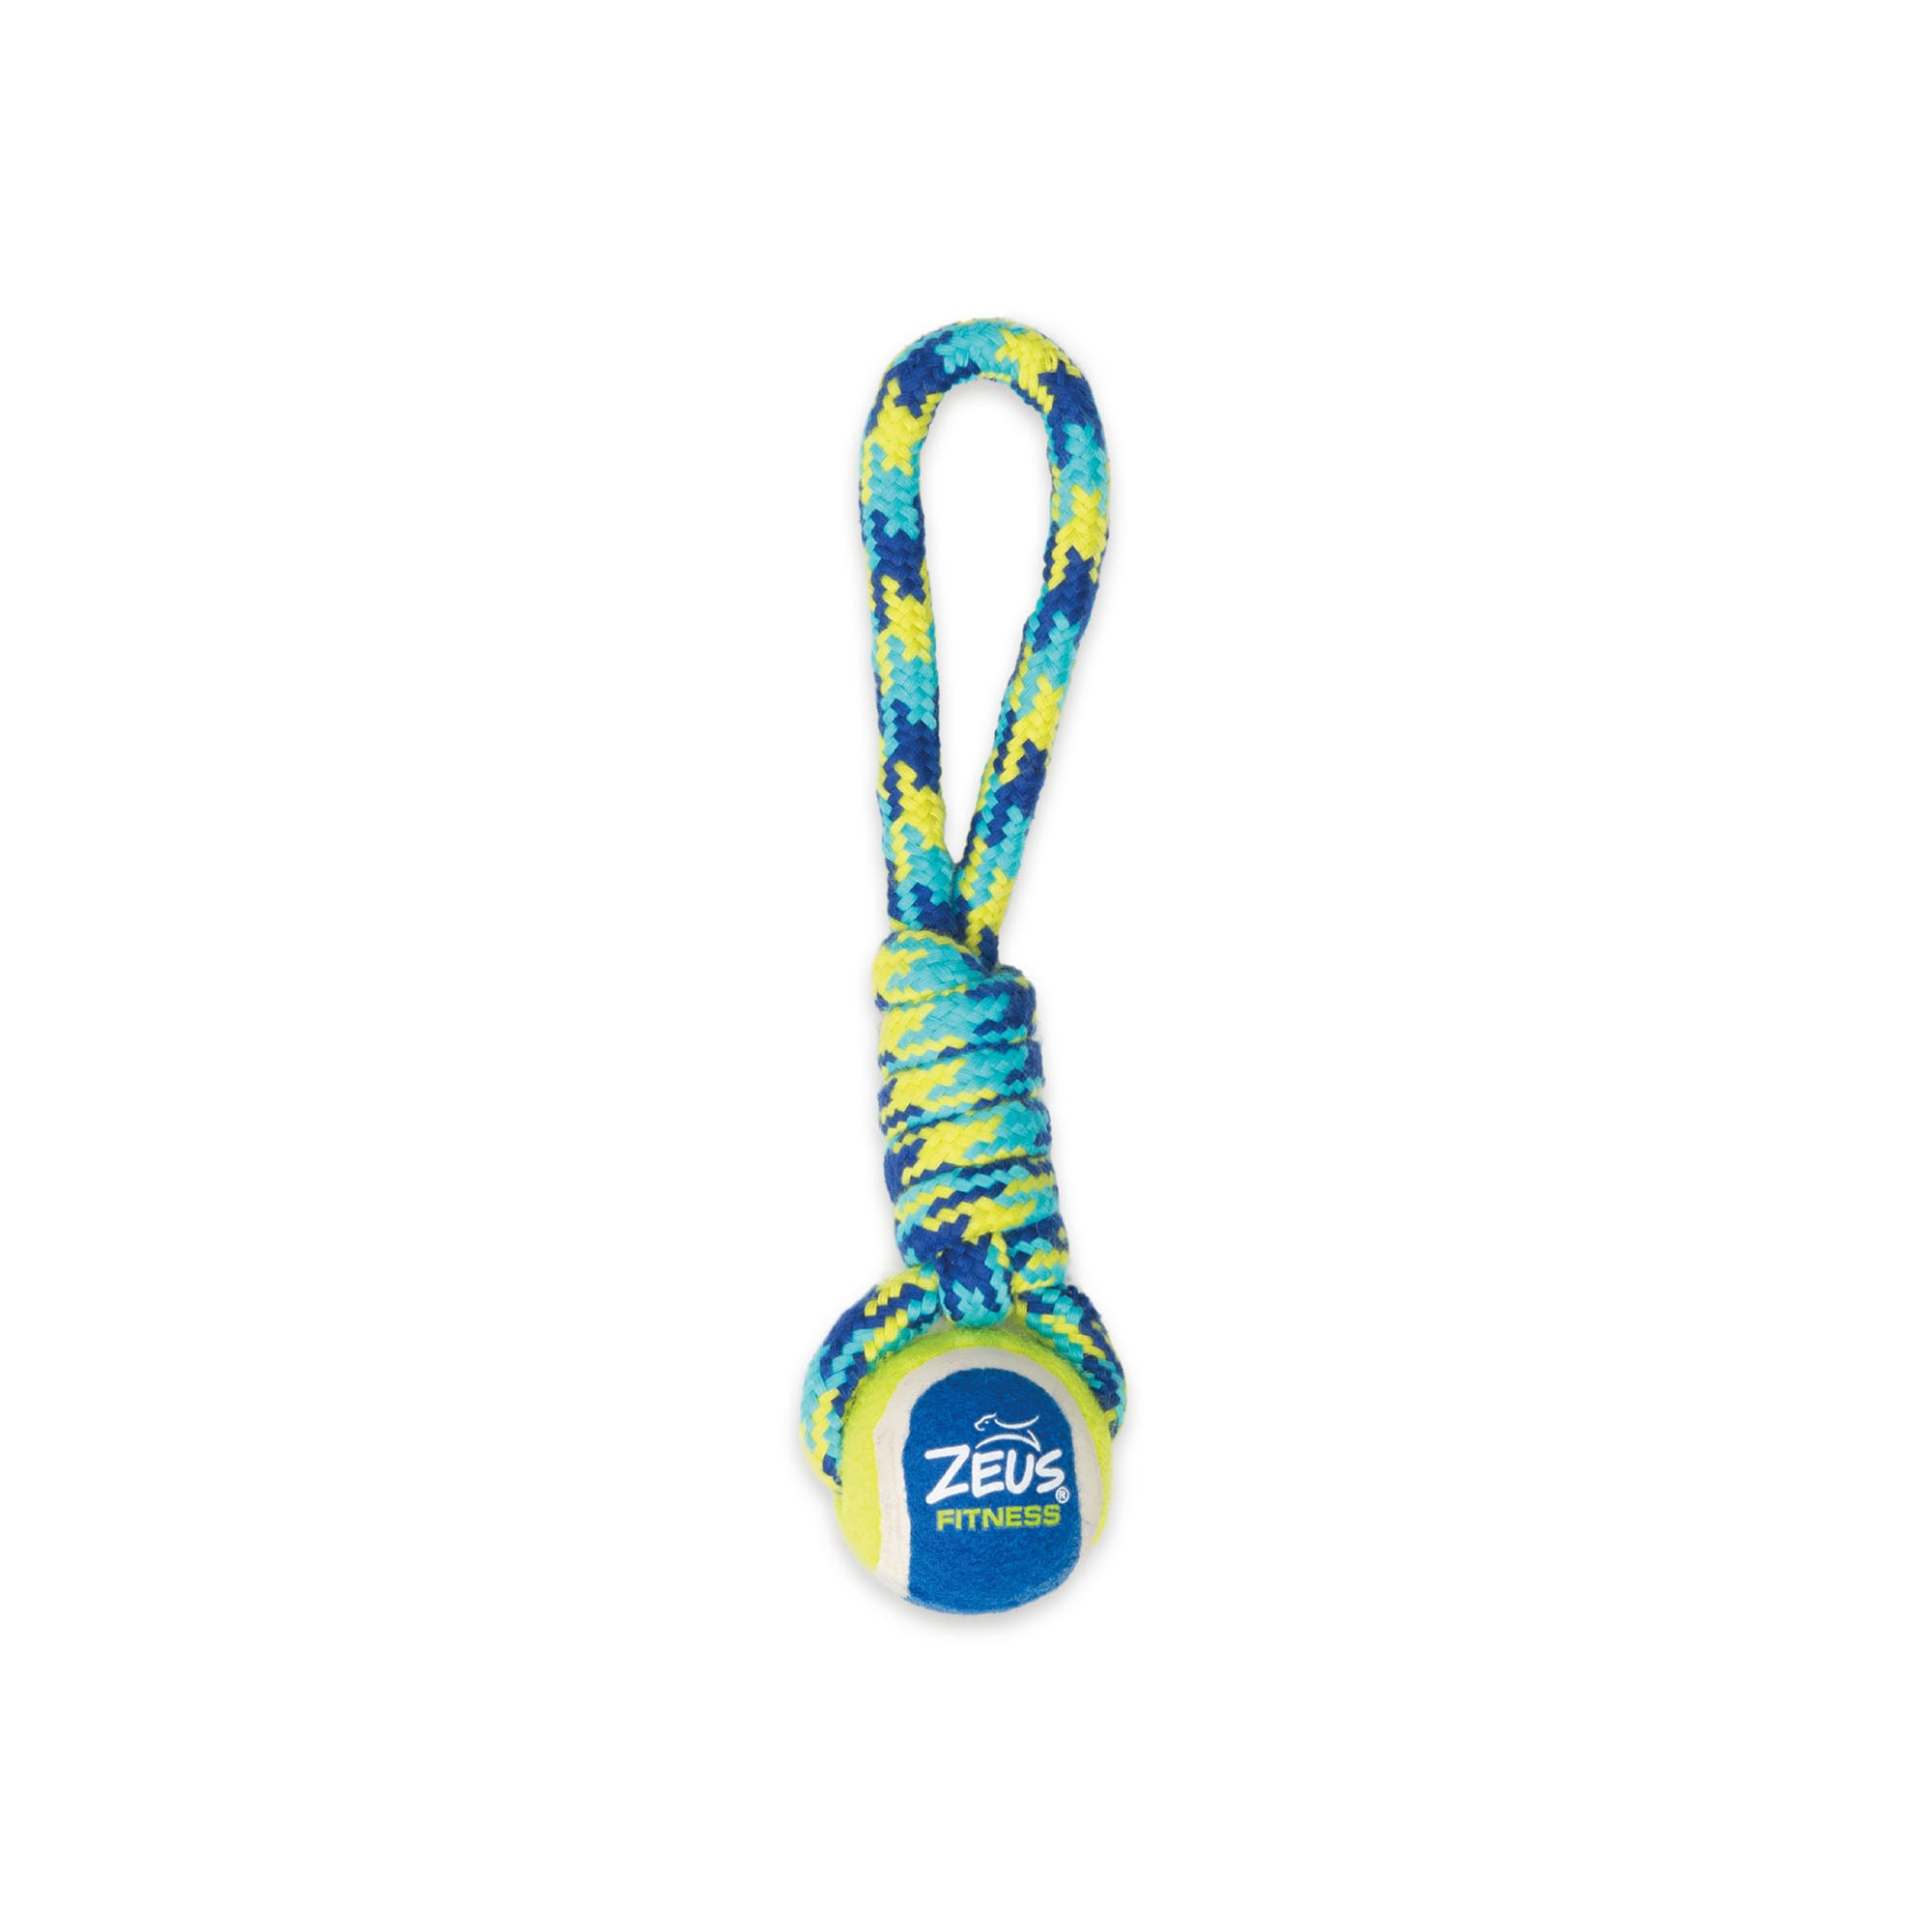 Zeus Fitness Dog Toys Tennis Ball Rope Tug 23cm